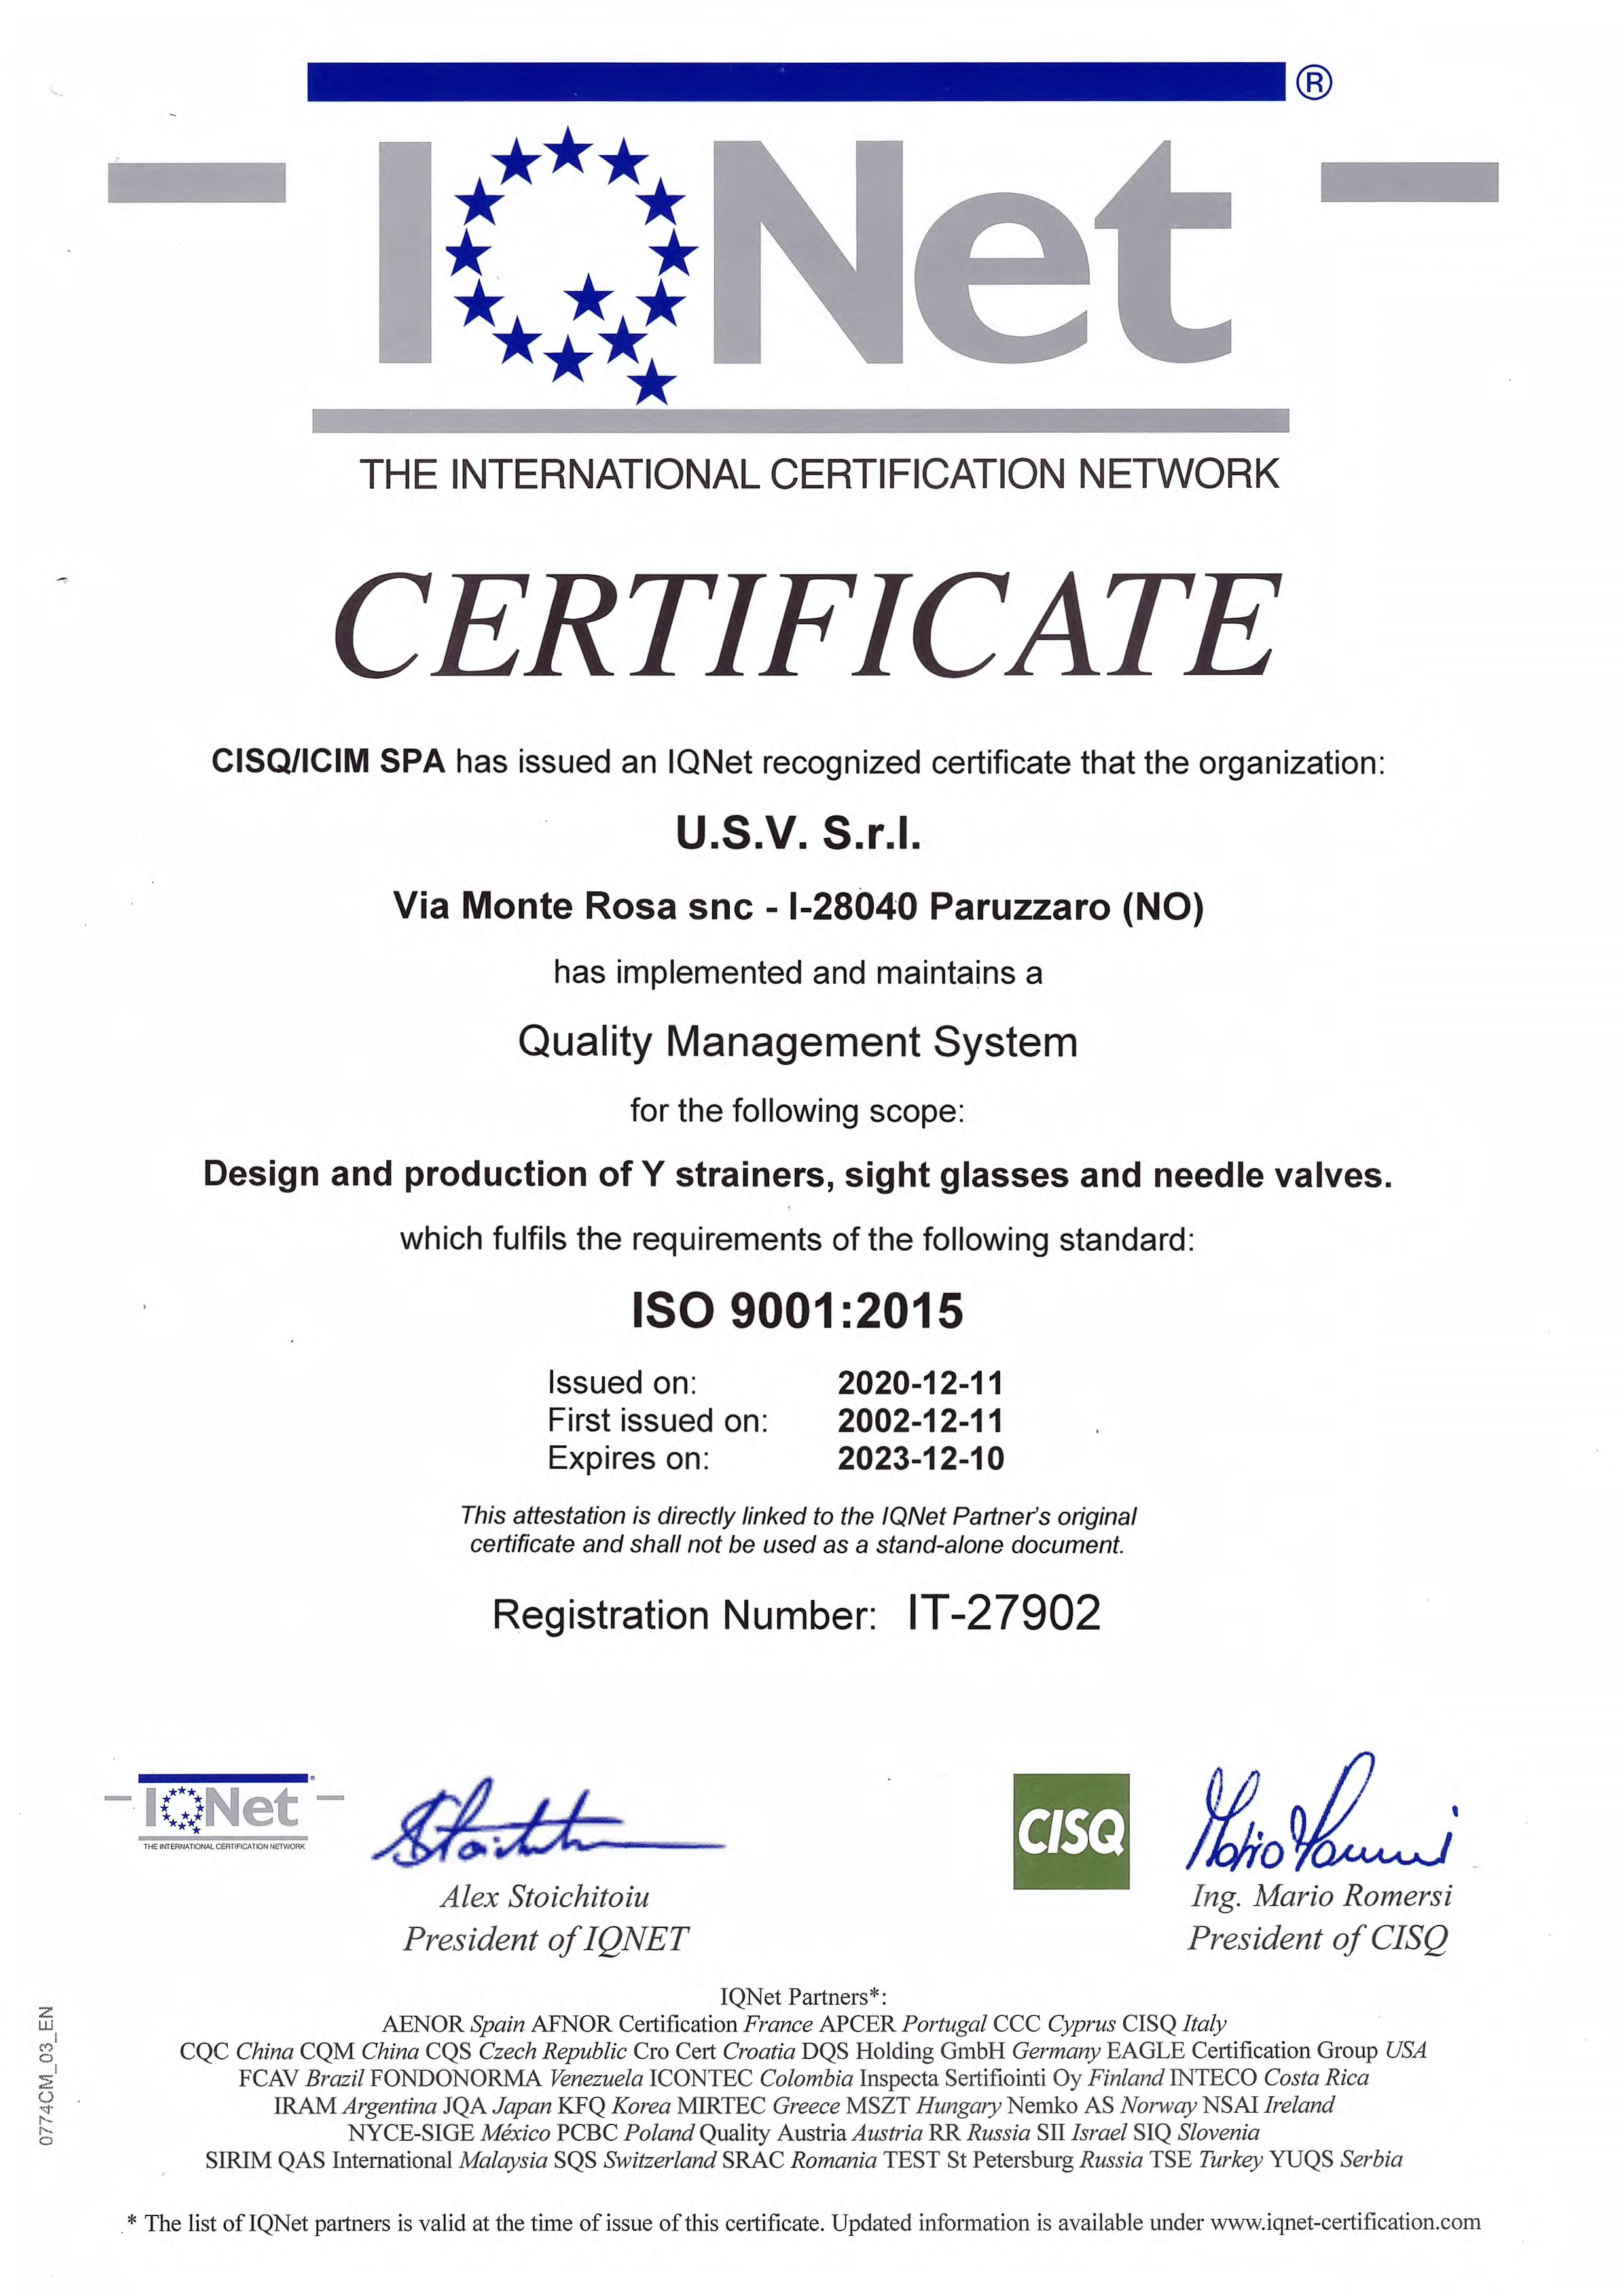 certificazione ISO 9001 ICIM